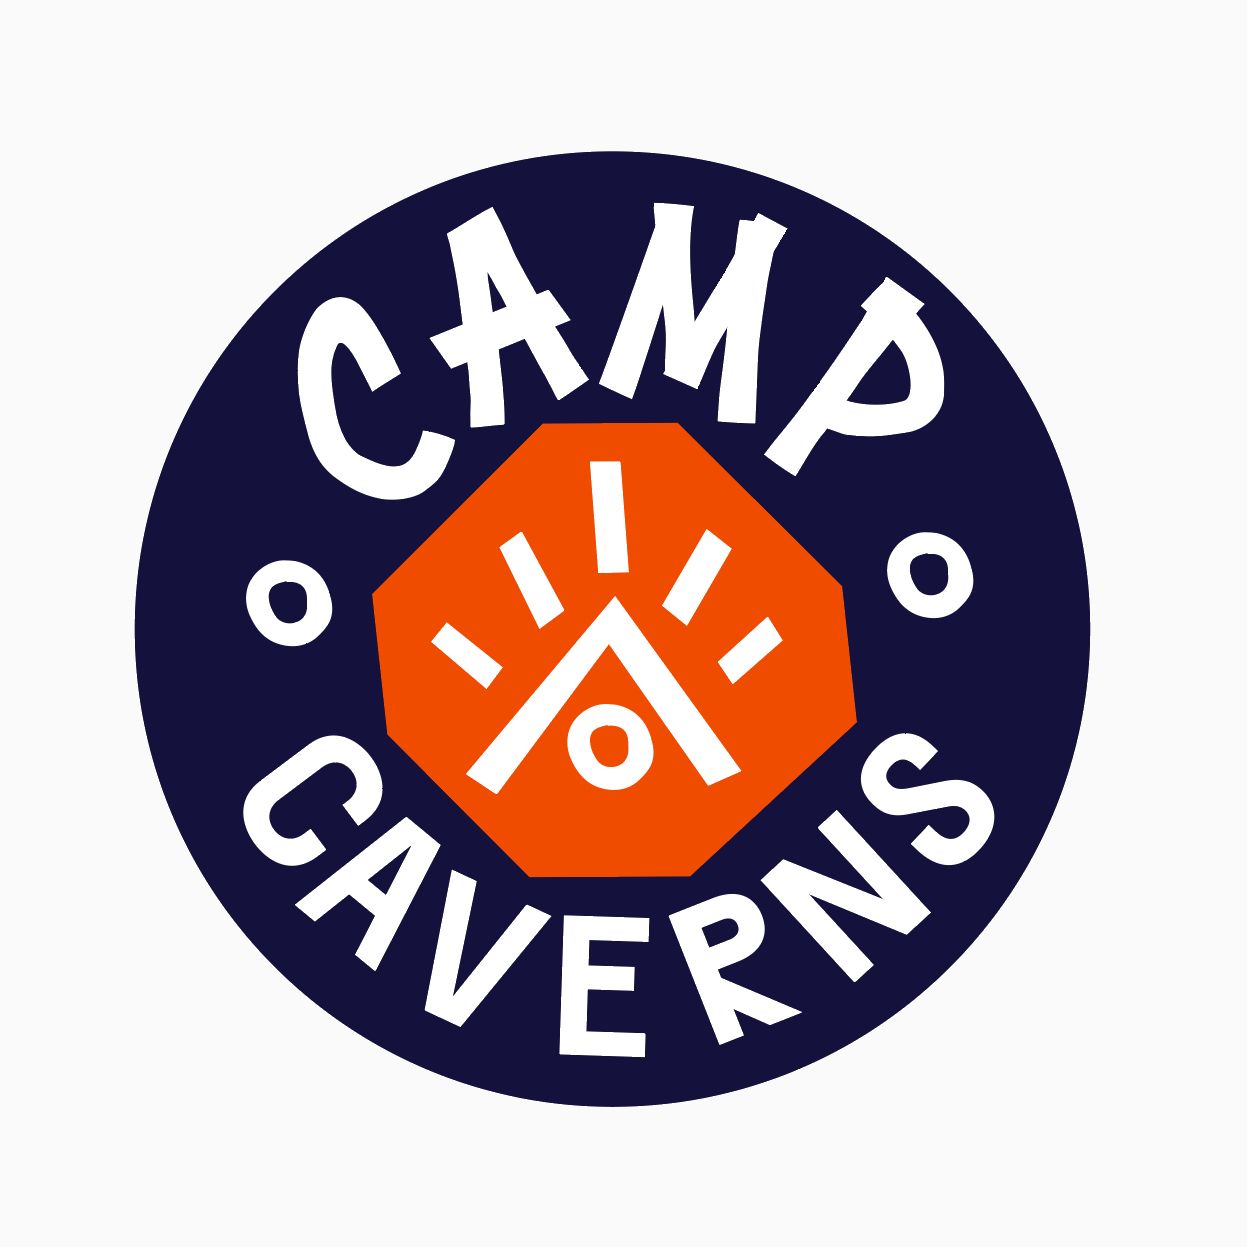 Camp Caverns badge.jpg